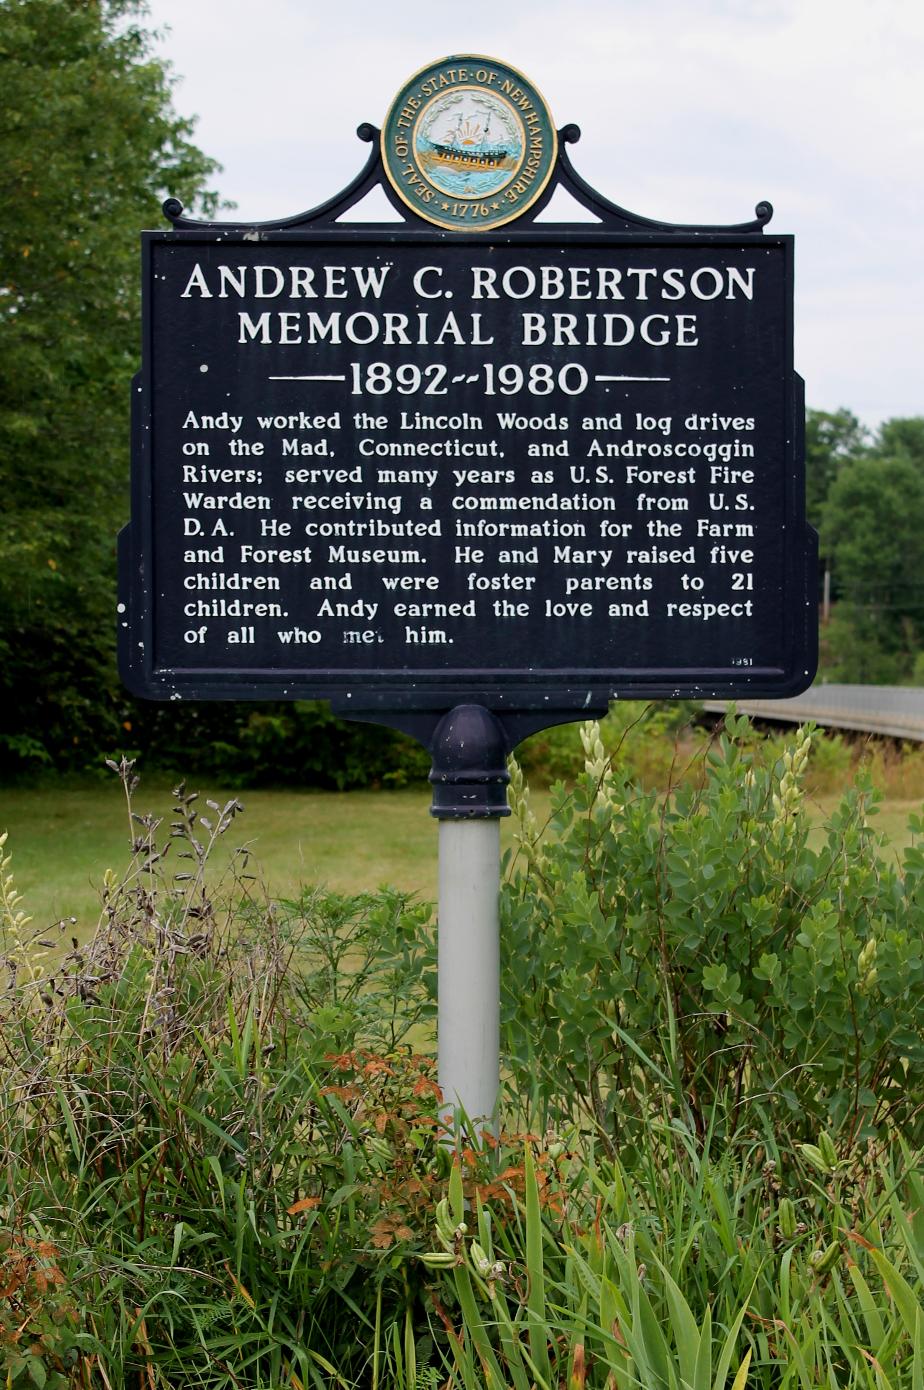 Andrew C. Robertson Memorial Bridge, Thornton NH